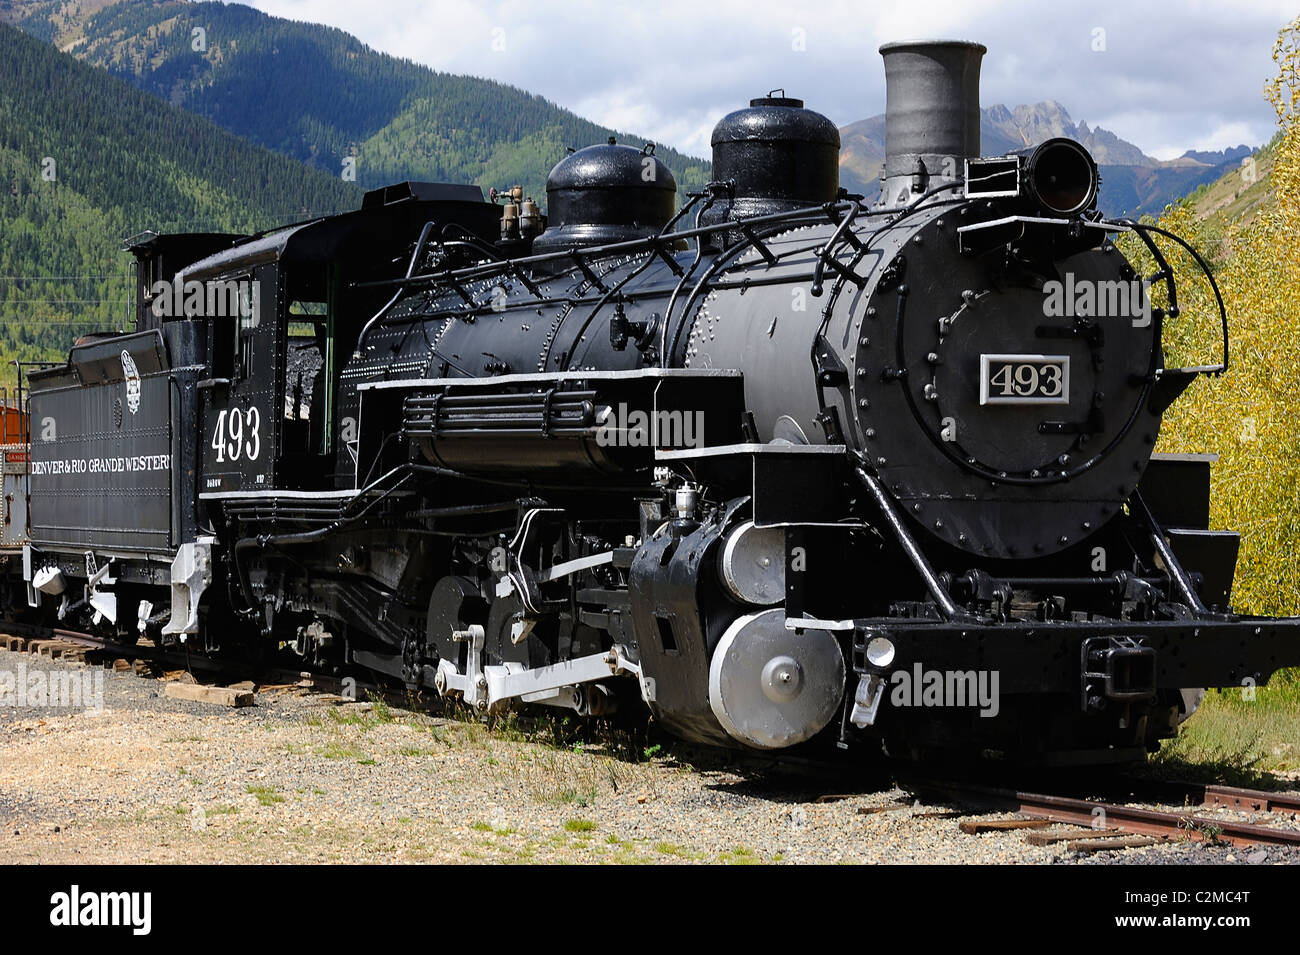 A steam engine, locomotive on the railroad between Durango and Silverton, Colorado, USA. Stock Photo